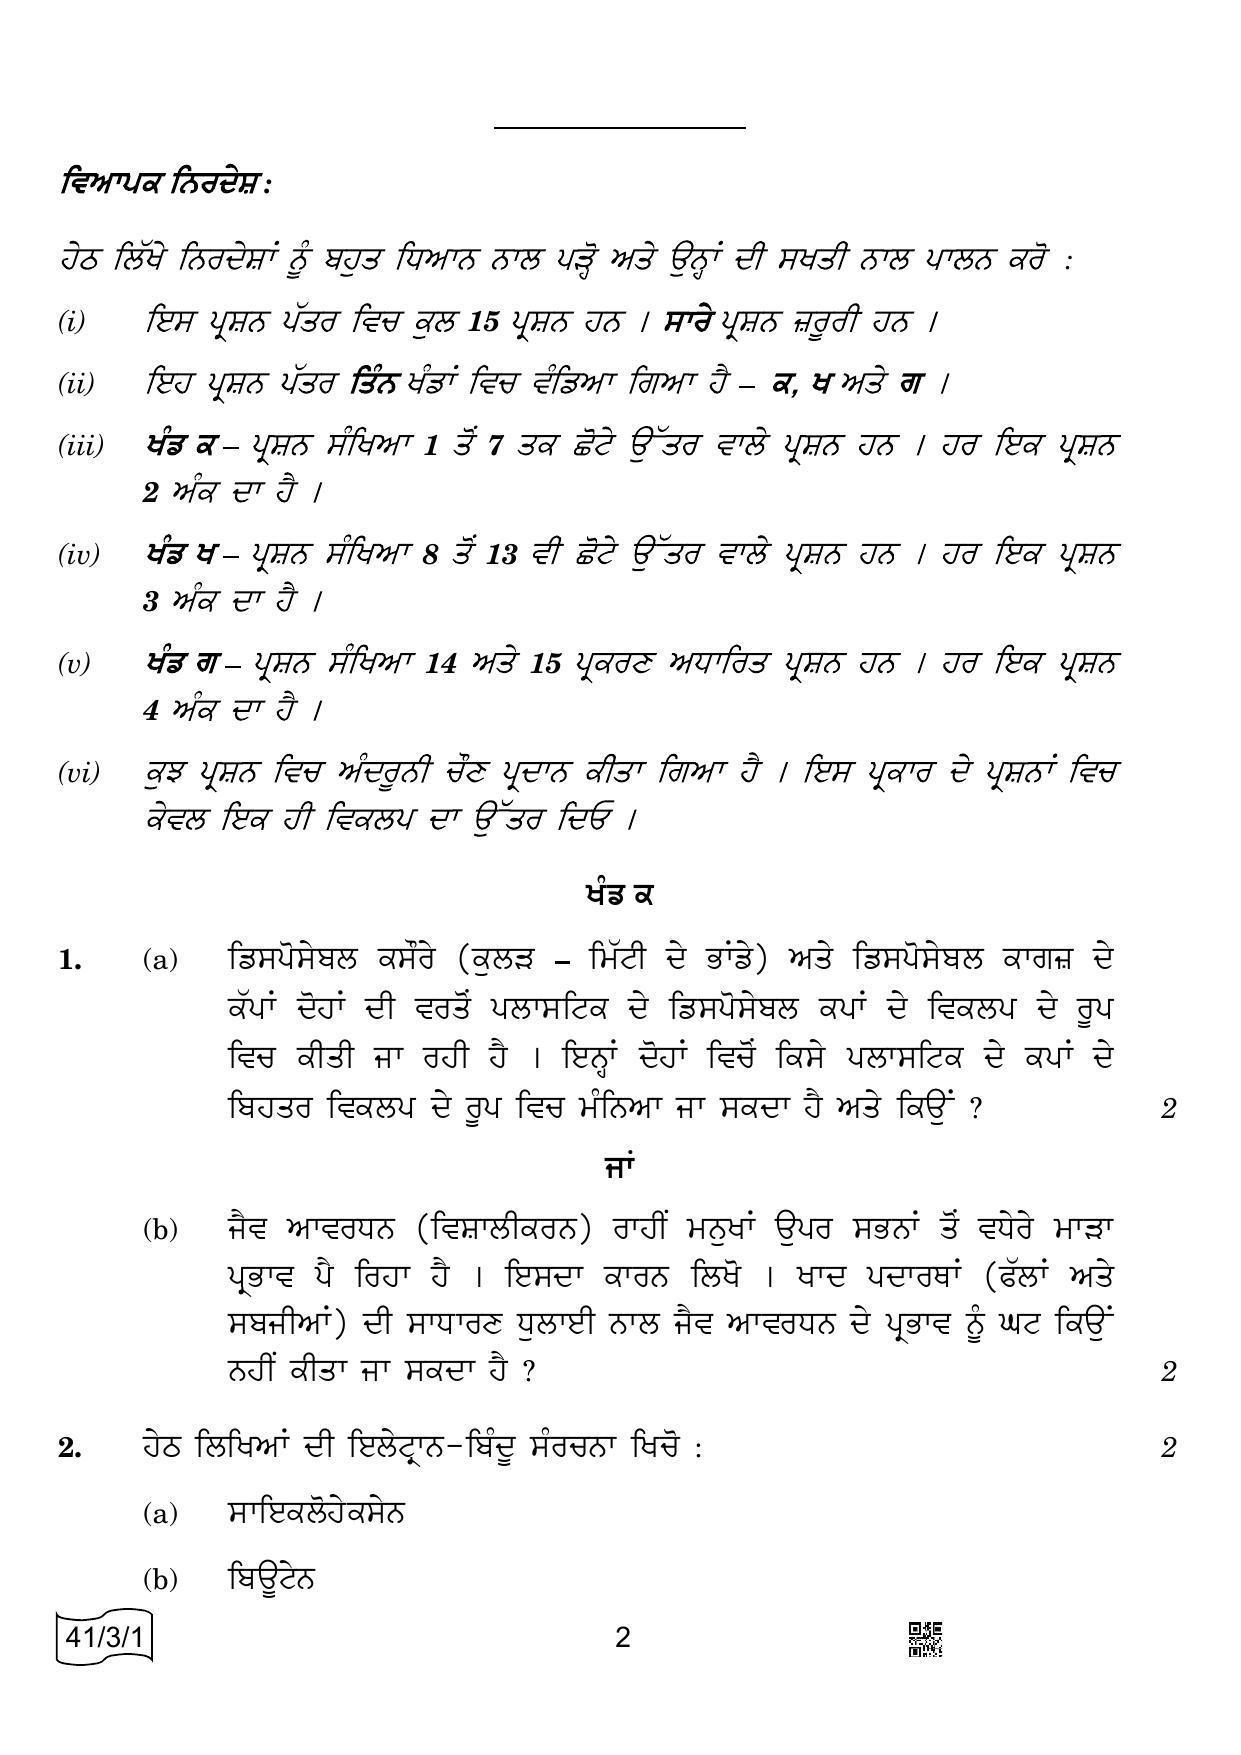 CBSE Class 10 41-3-1 Science Punjabi Version 2022 Question Paper - Page 2